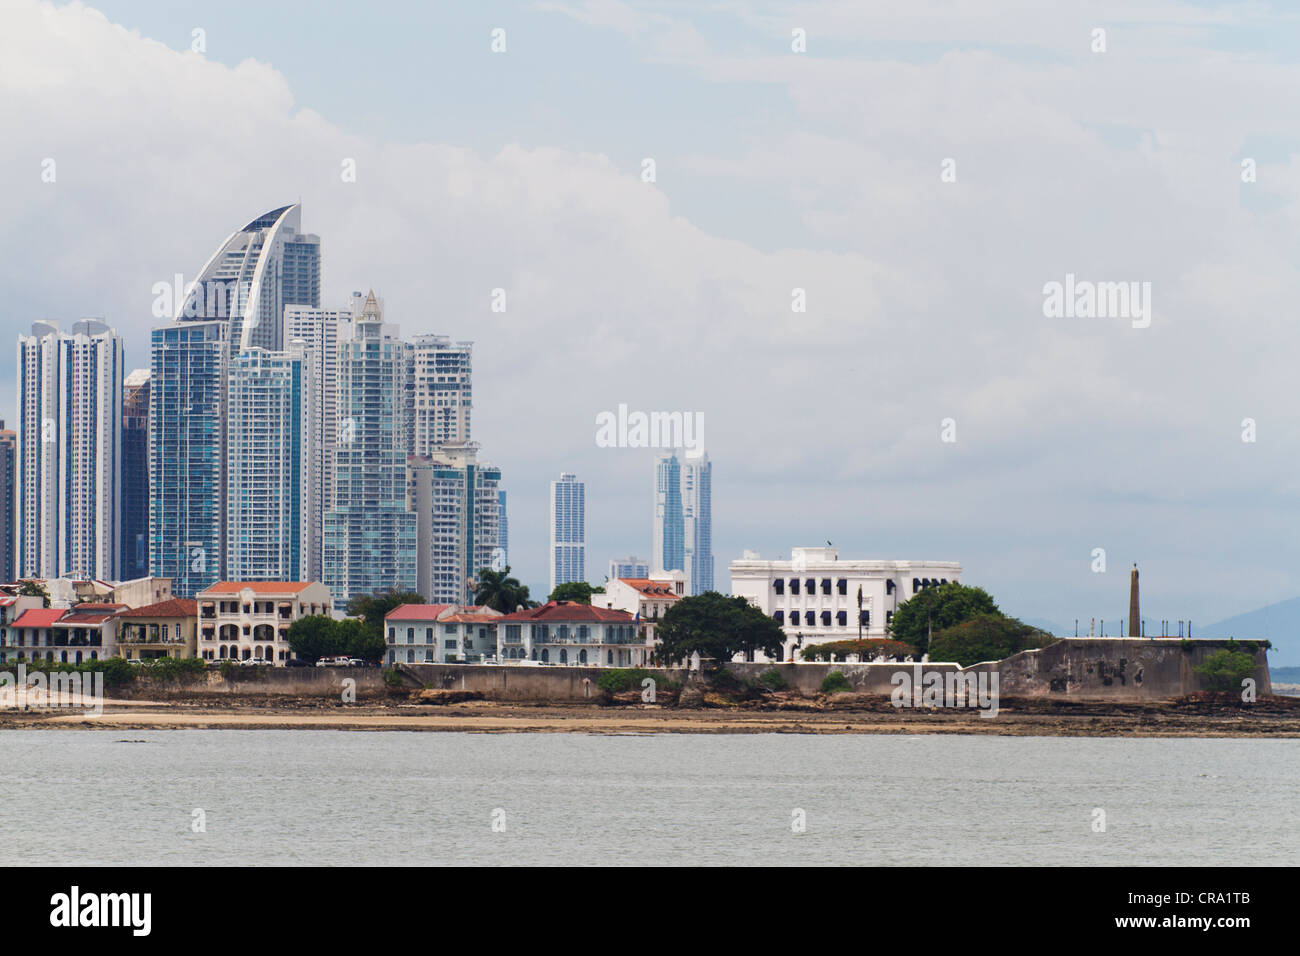 Old Quarter skyline with modern Panama City skyline as a backdrop. Republic of Panama, Central America Stock Photo